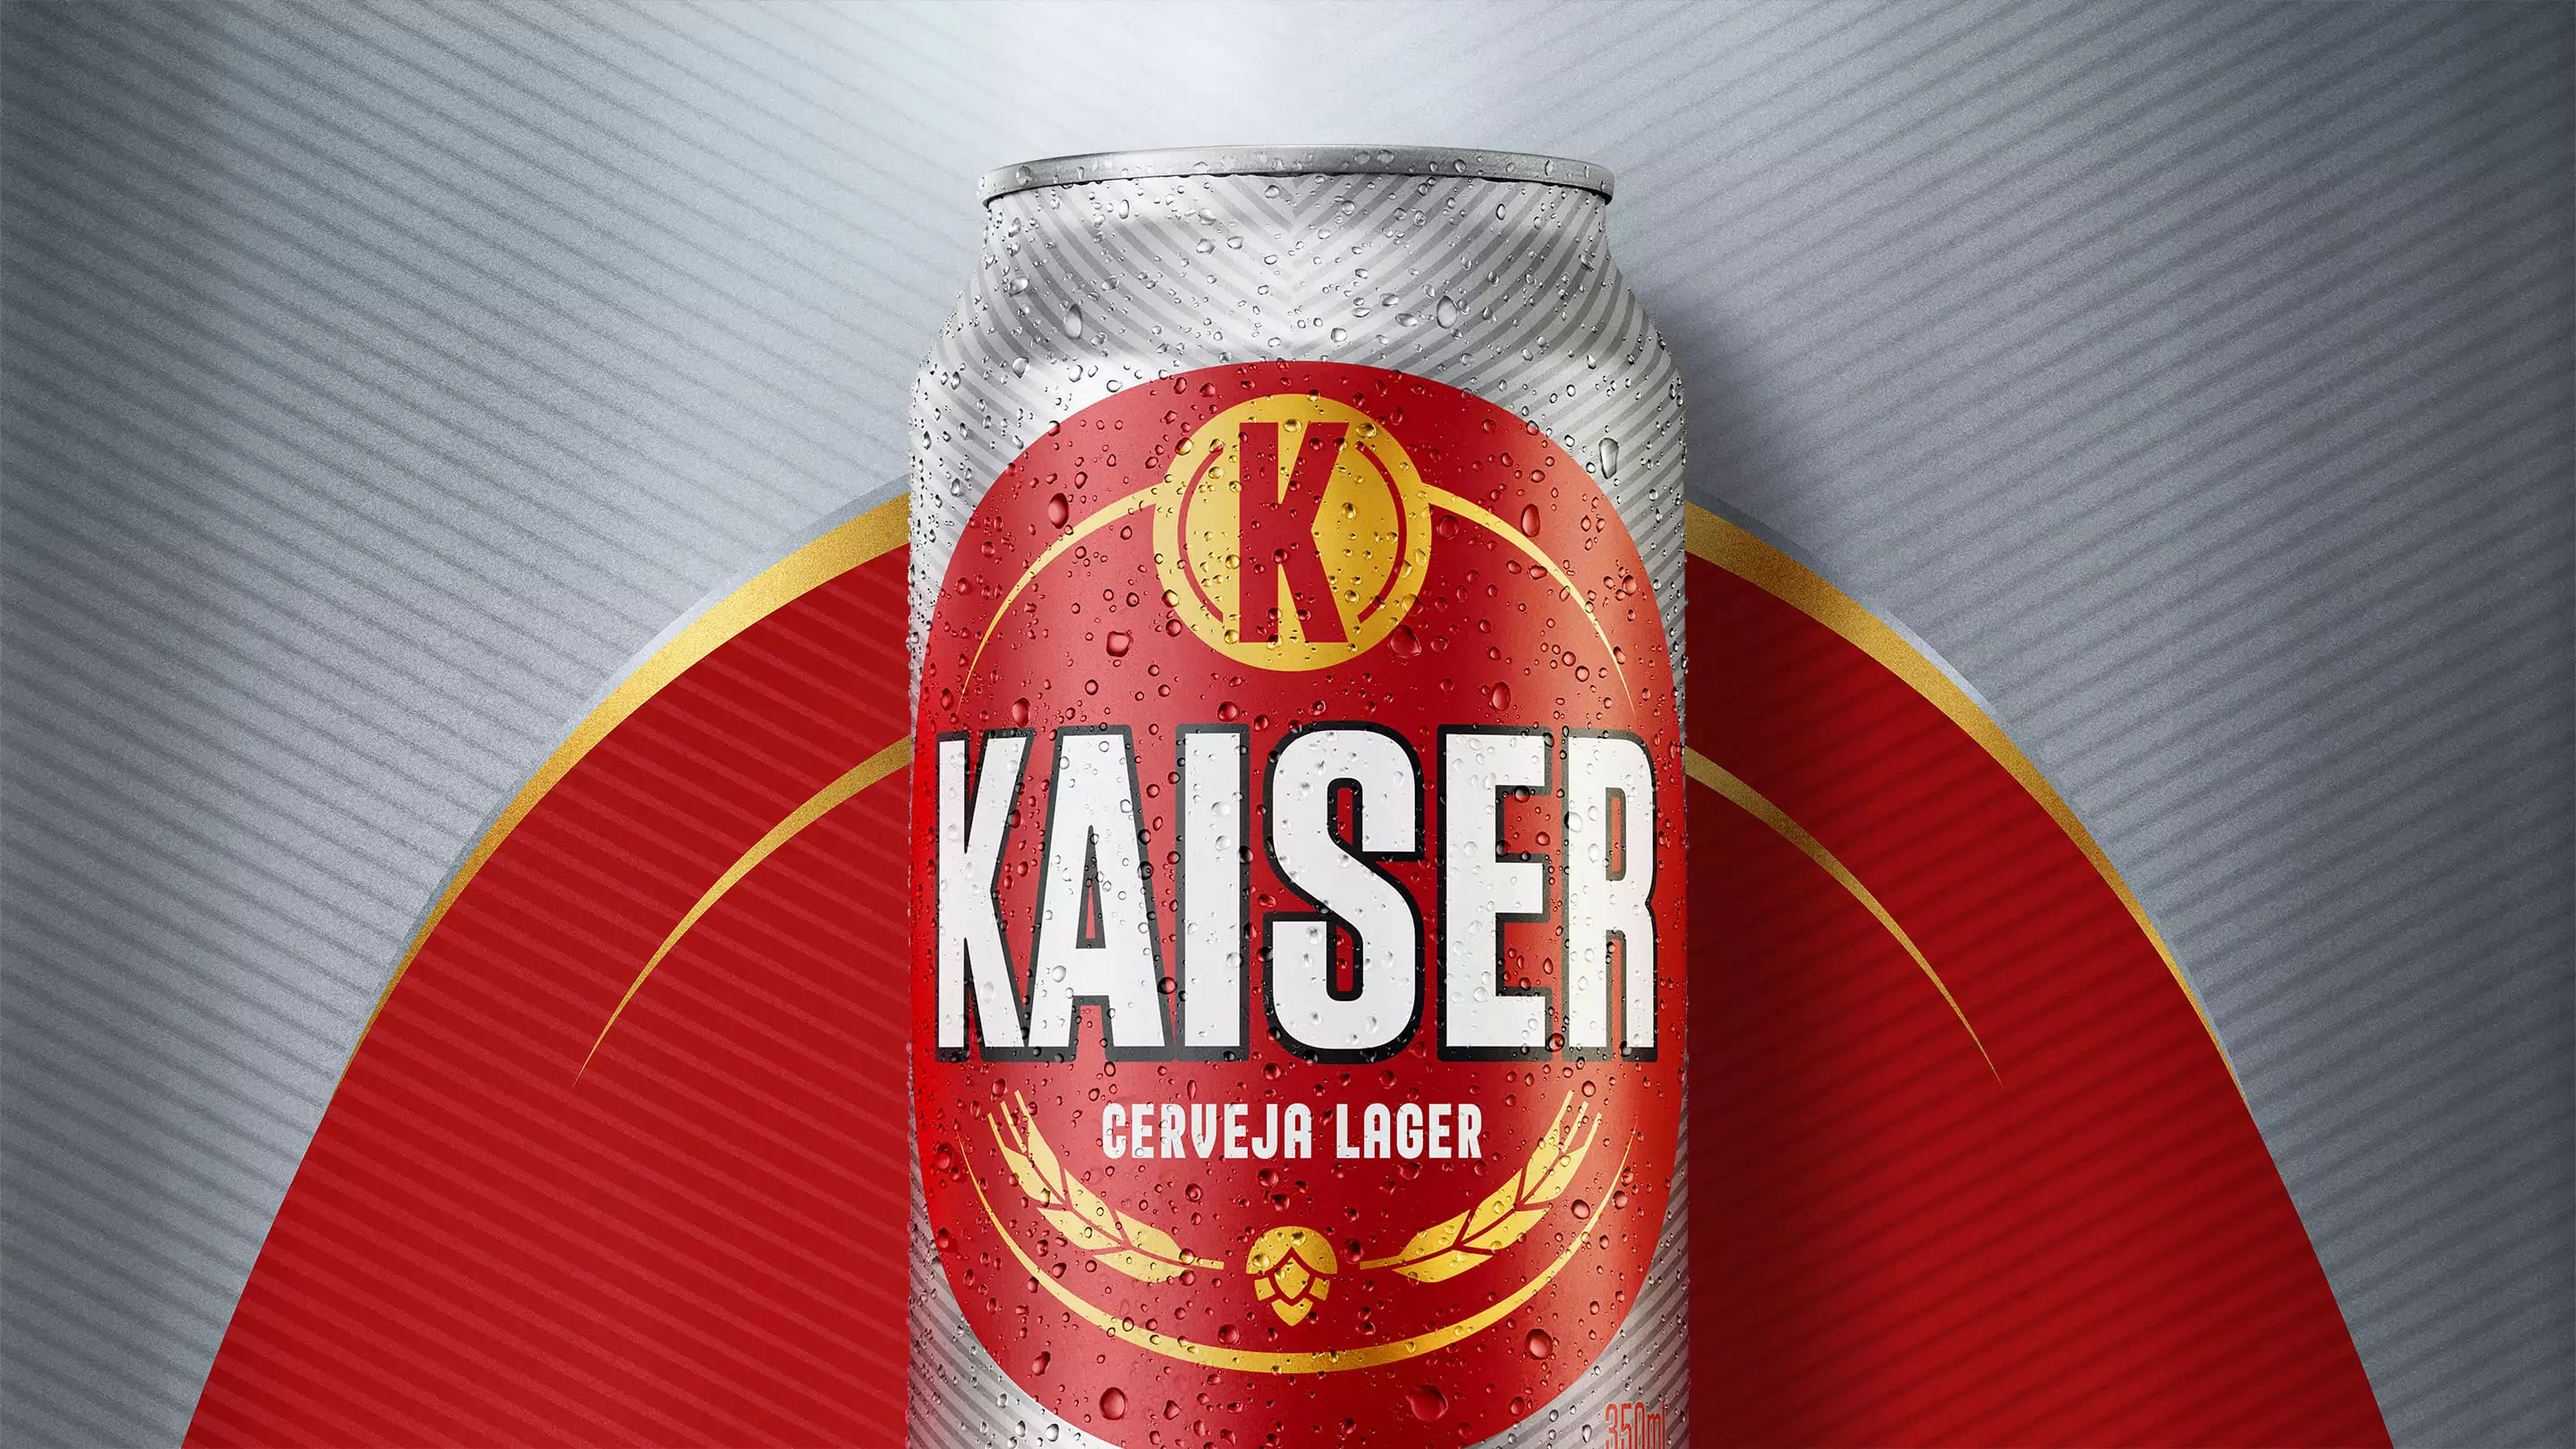 Lata de Cerveja Kaiser 350ml